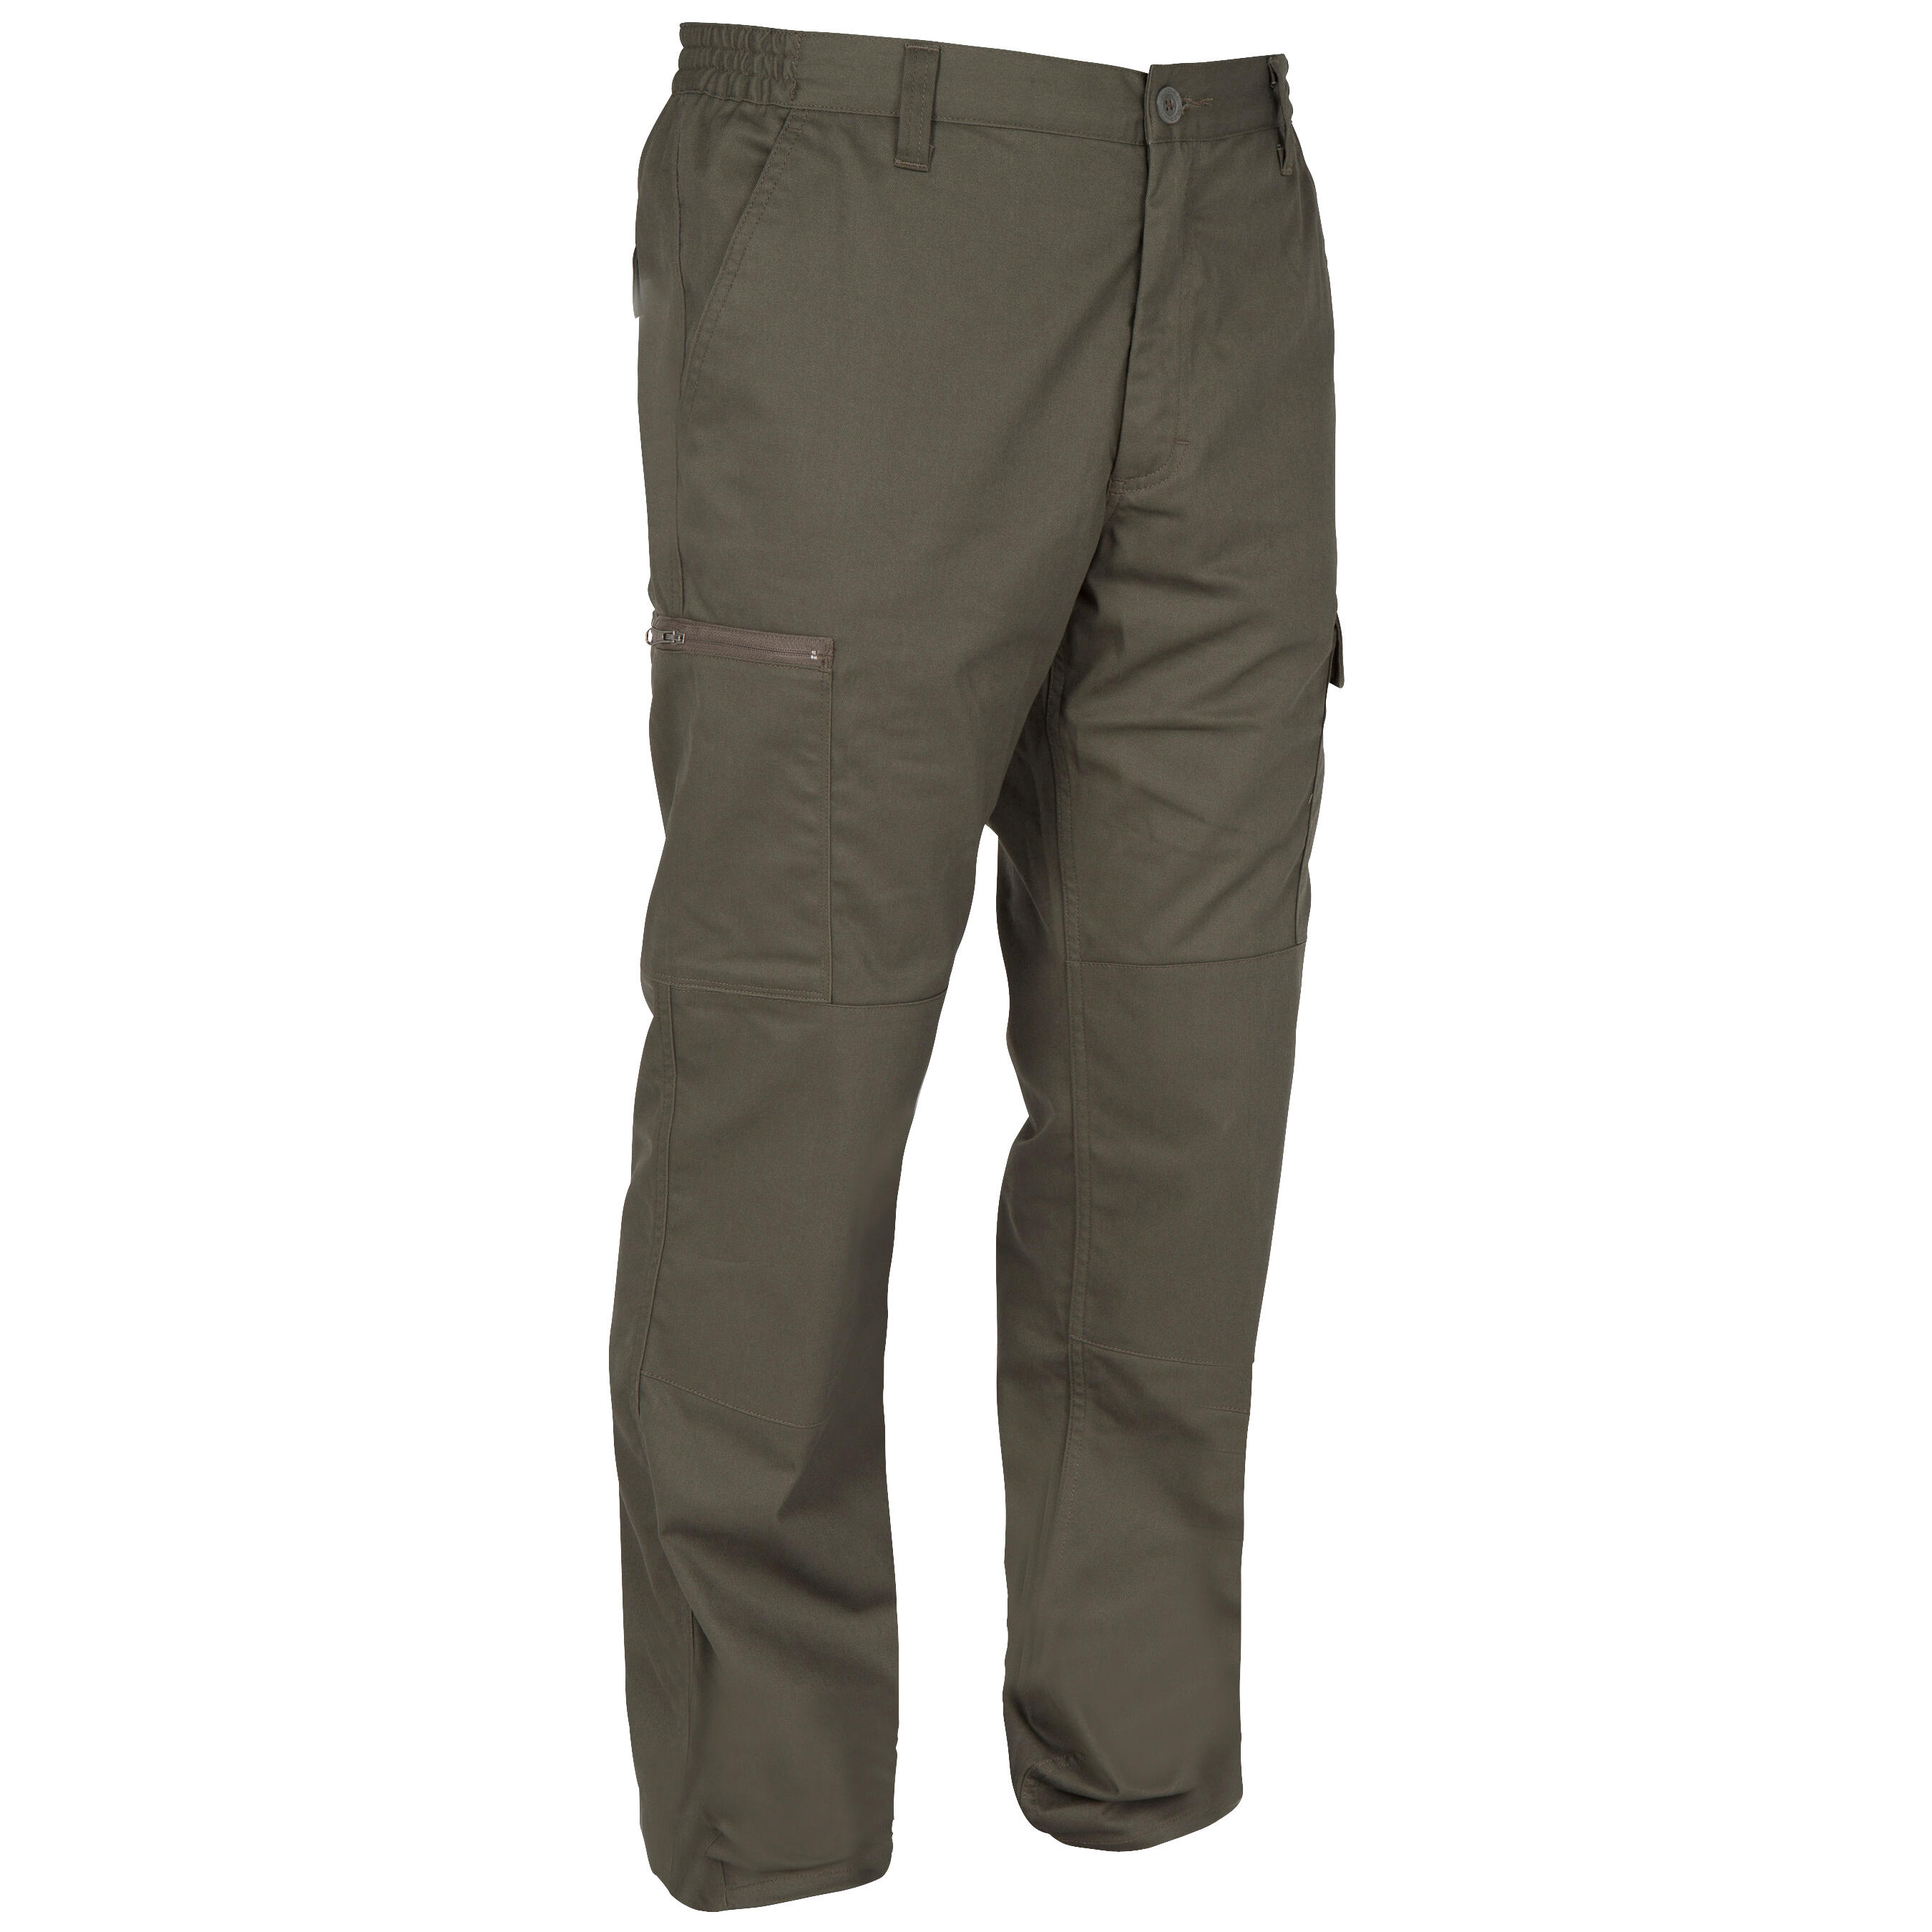 DECATHLON Mens Green Camouflage Cotton Cargo Trousers Size 42 in L32 i –  Preworn Ltd